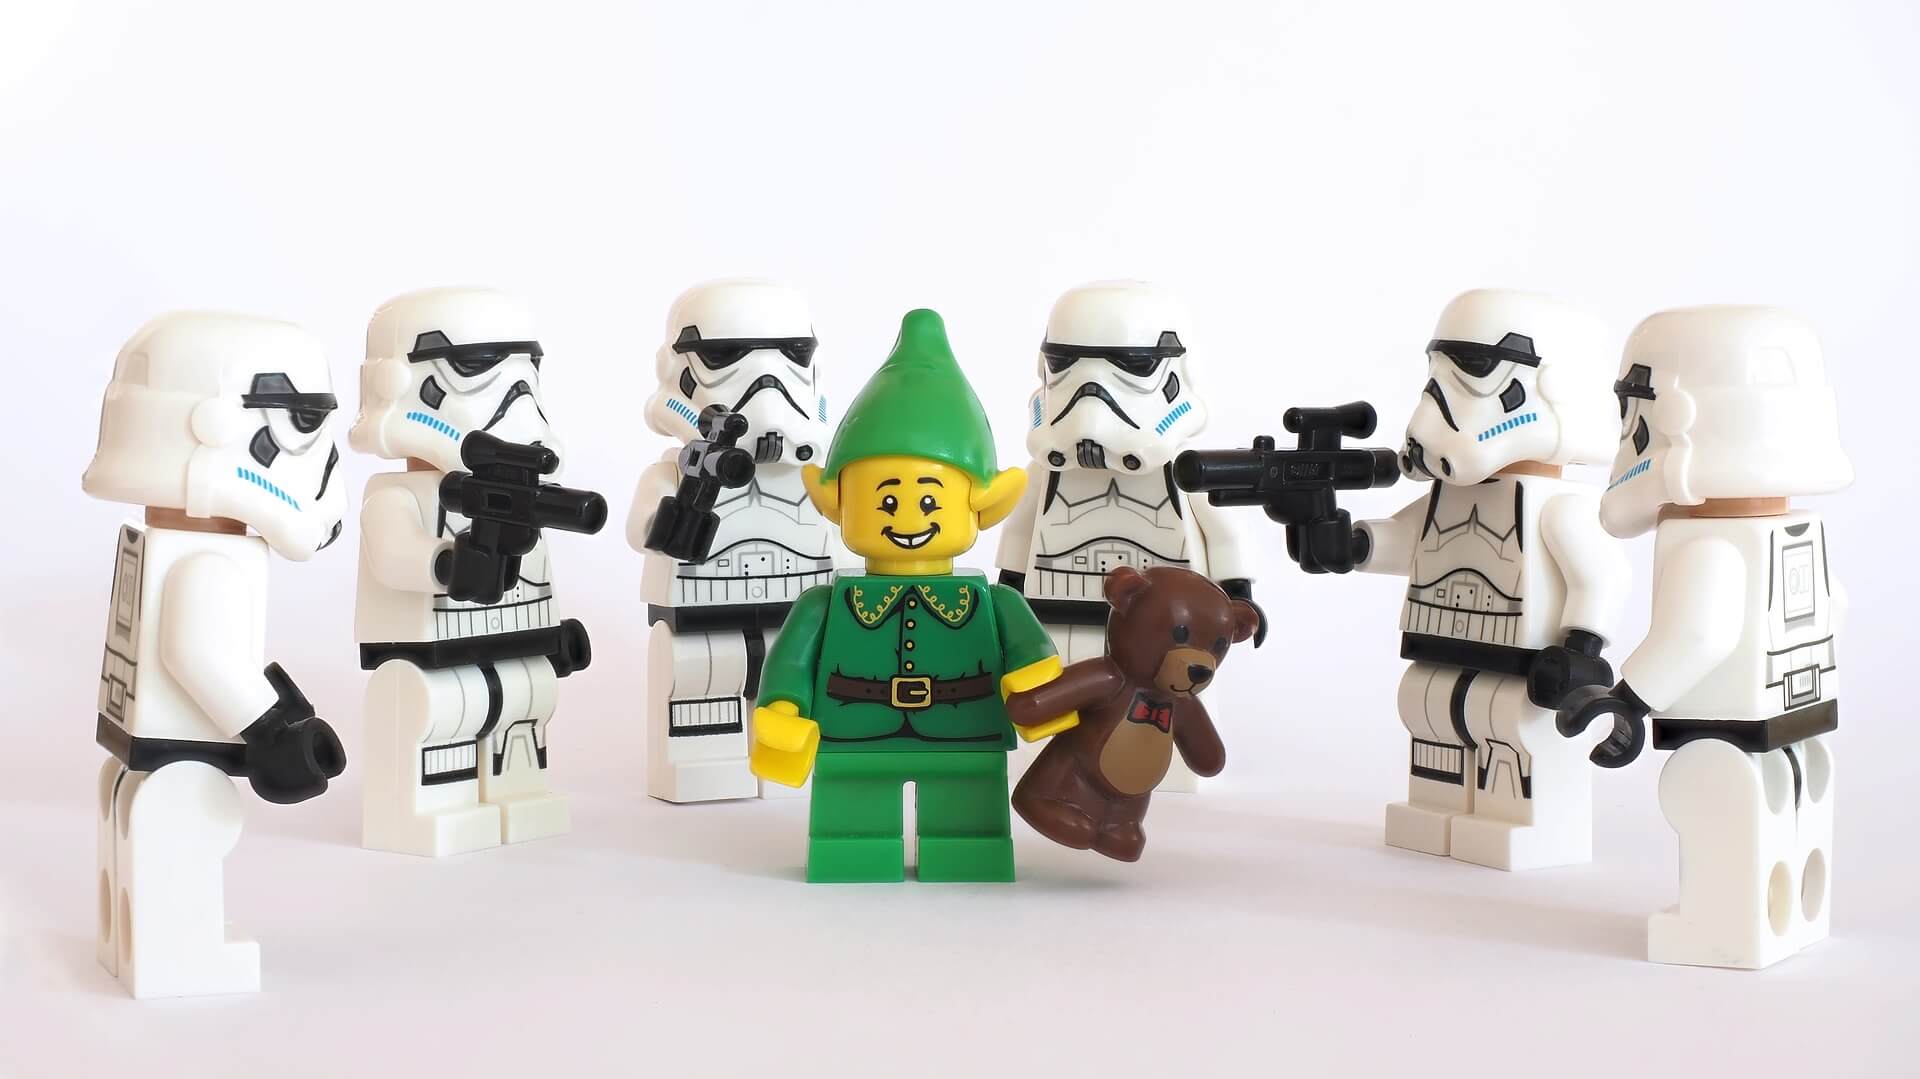 alt="lego star wars figures"